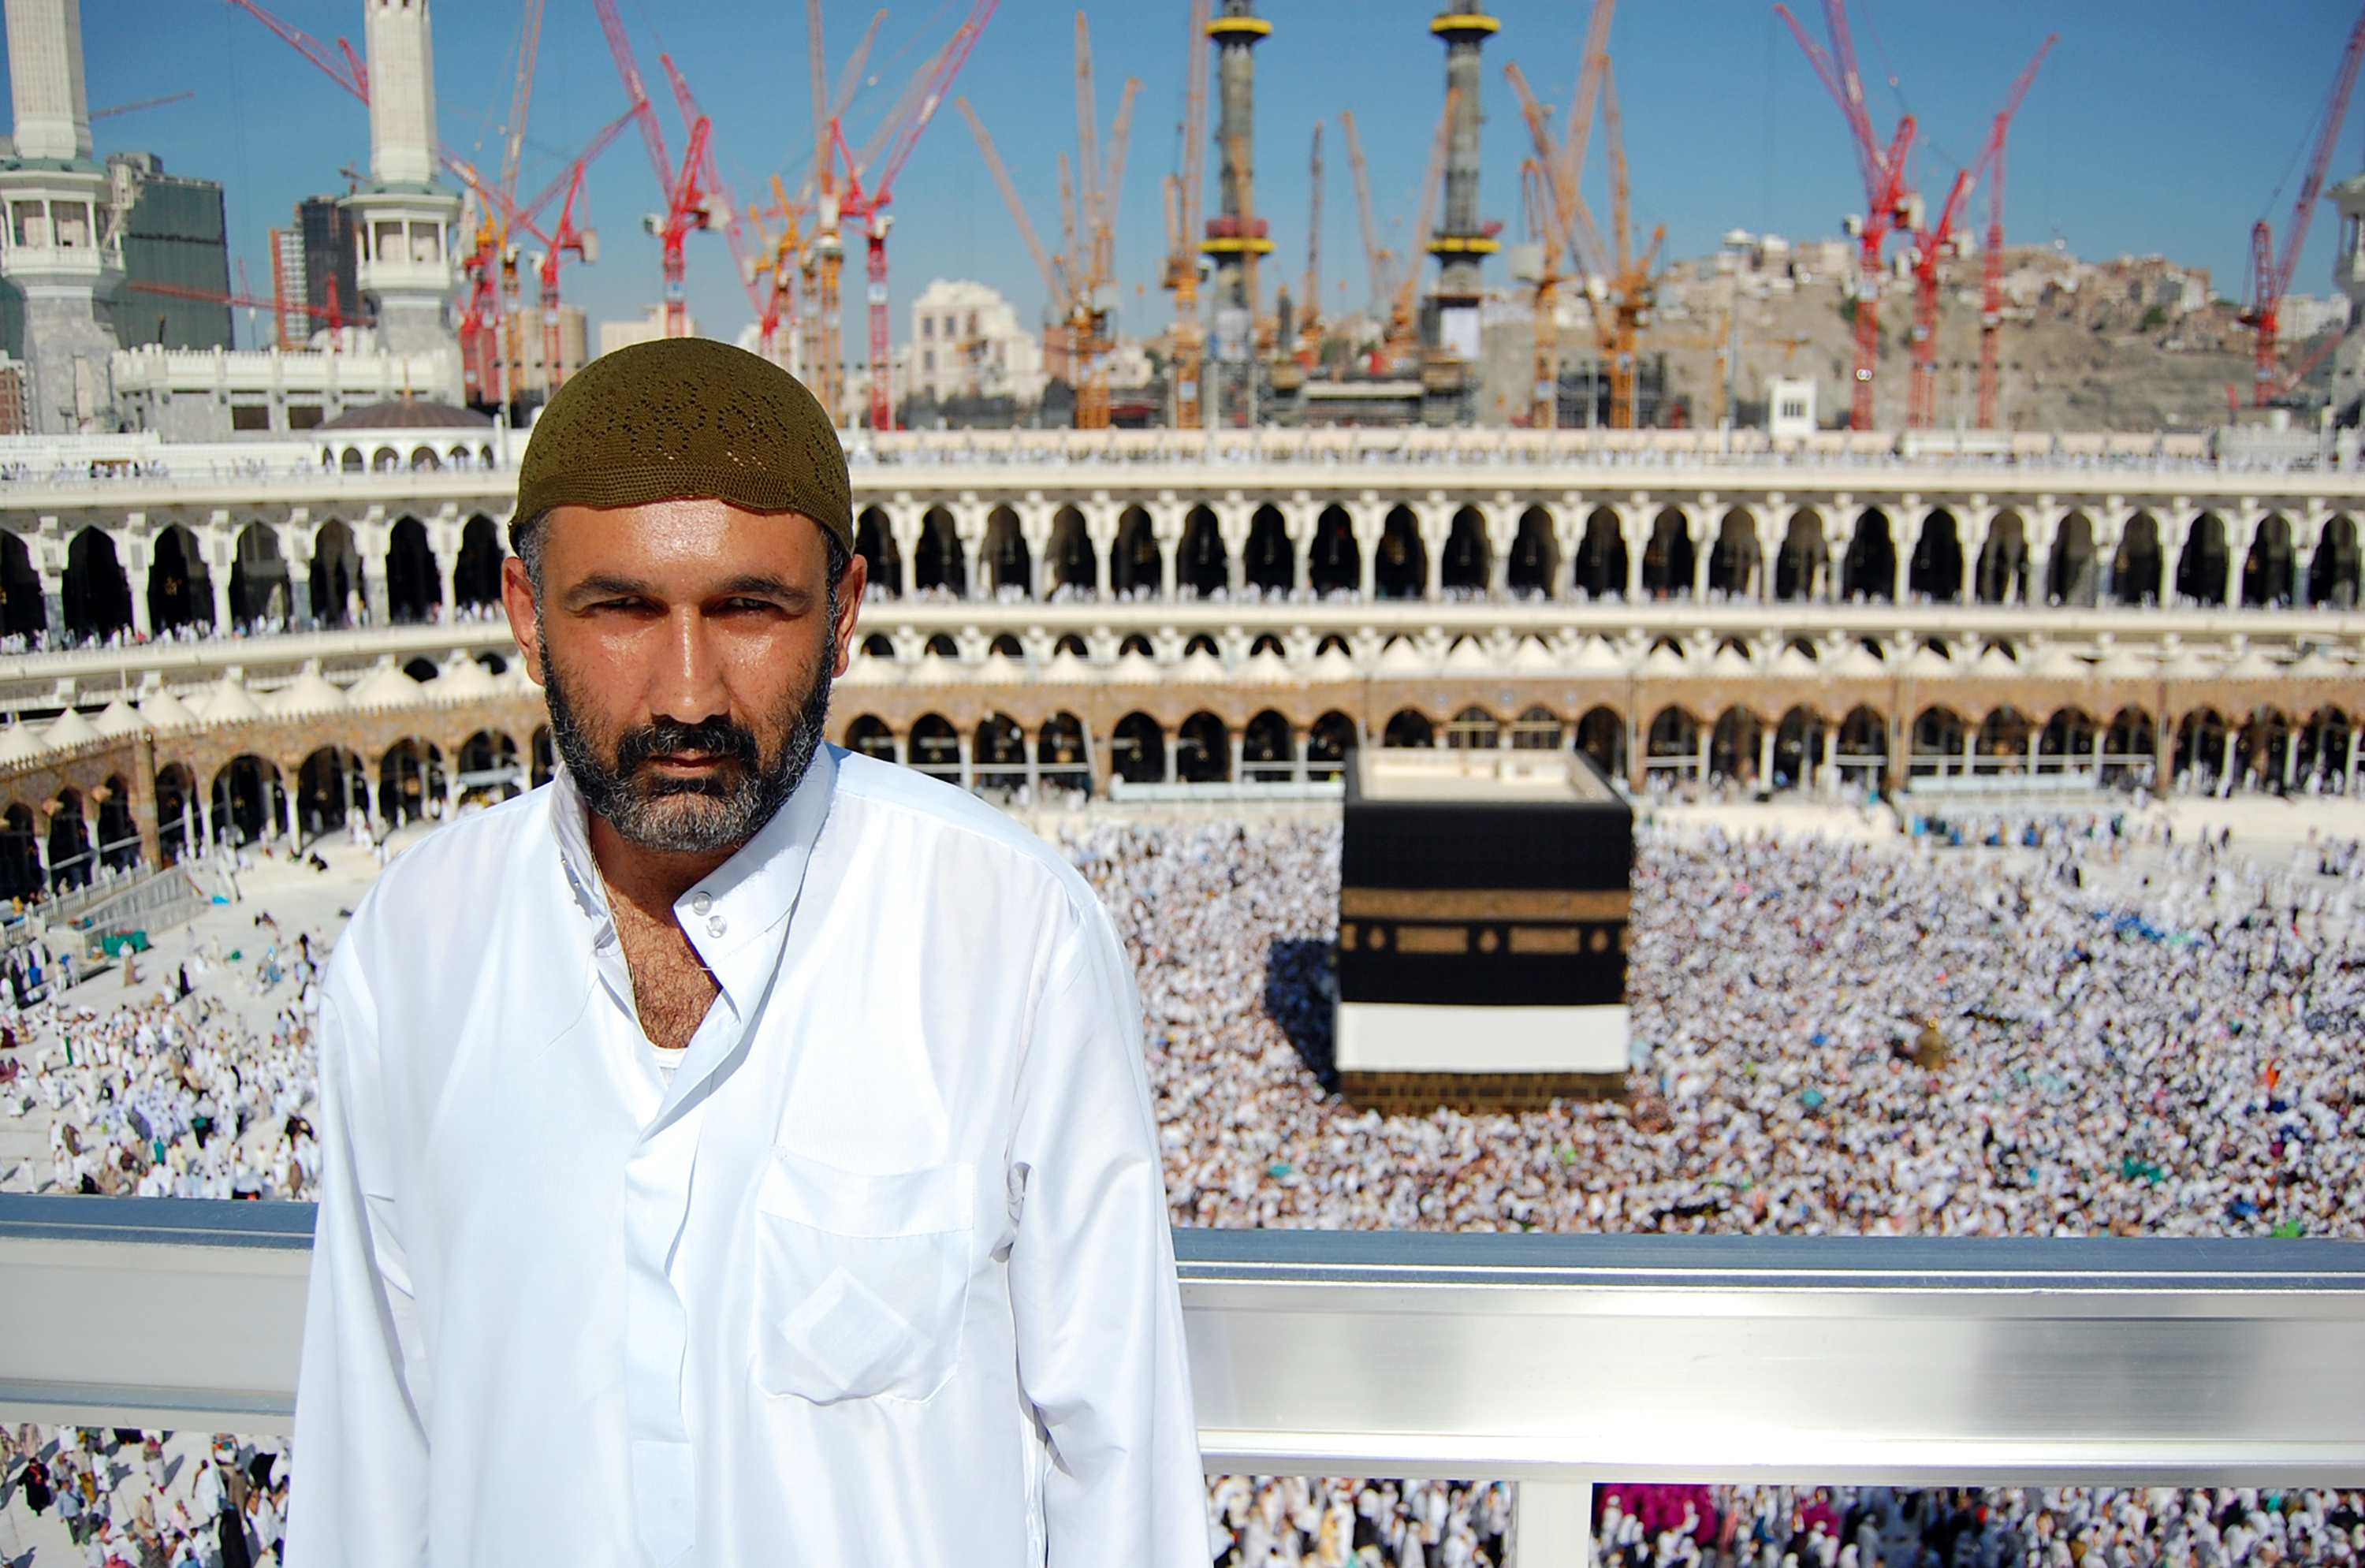 Parvez Sharma photographed with the Kaaba behind him. (Photo courtesy Haram Films/TNS)